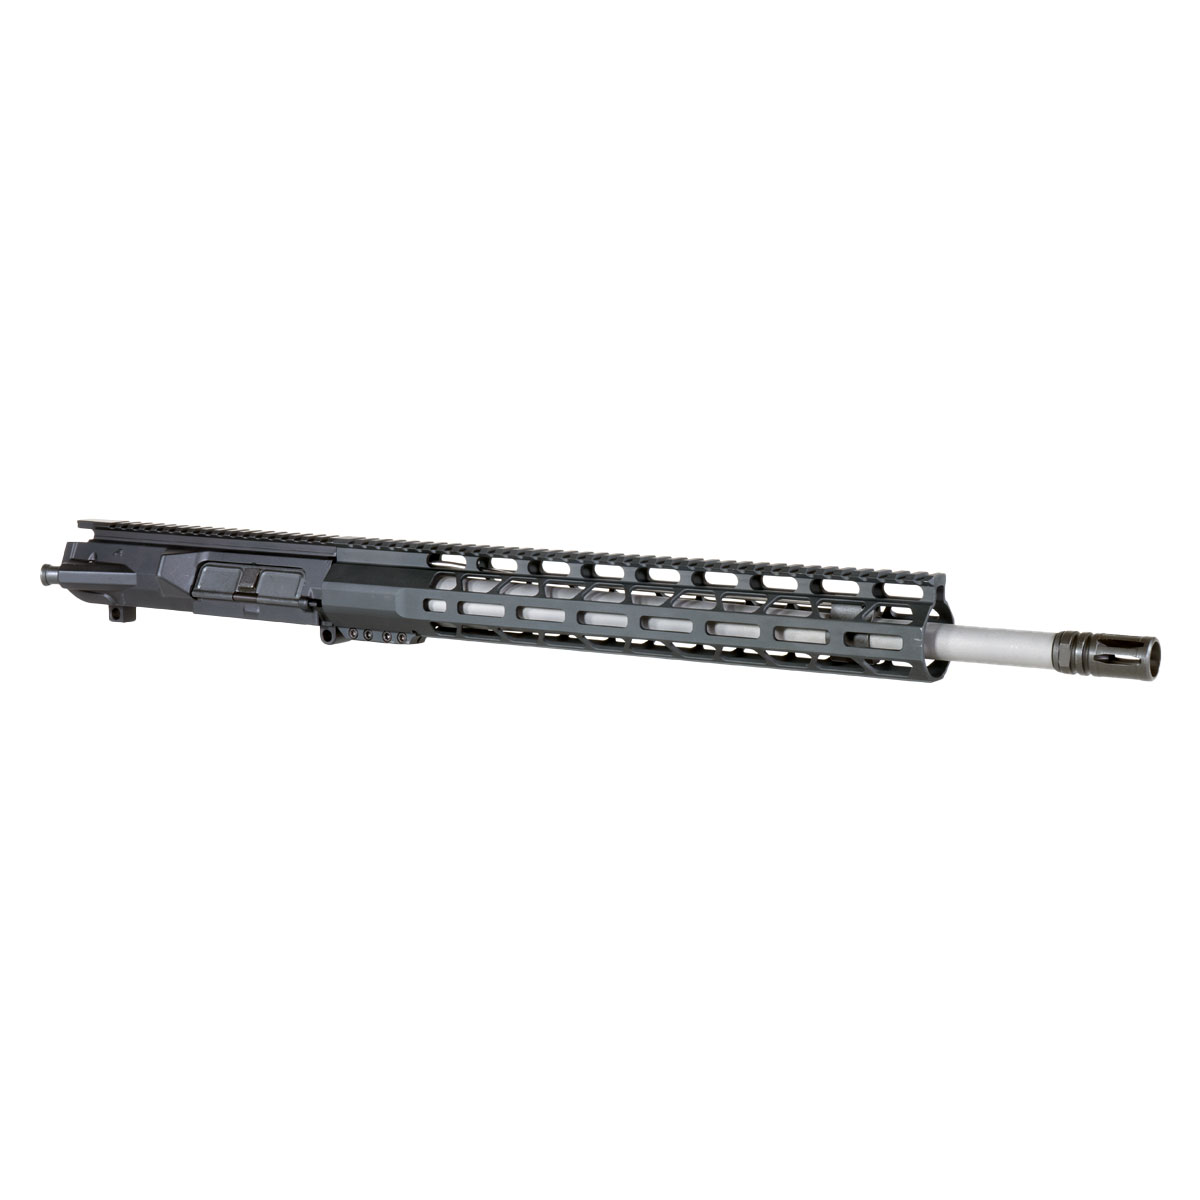 MMC 'Overpressure' 18-inch LR-308 .308 Win Bead Blasted Rifle Upper Build Kit